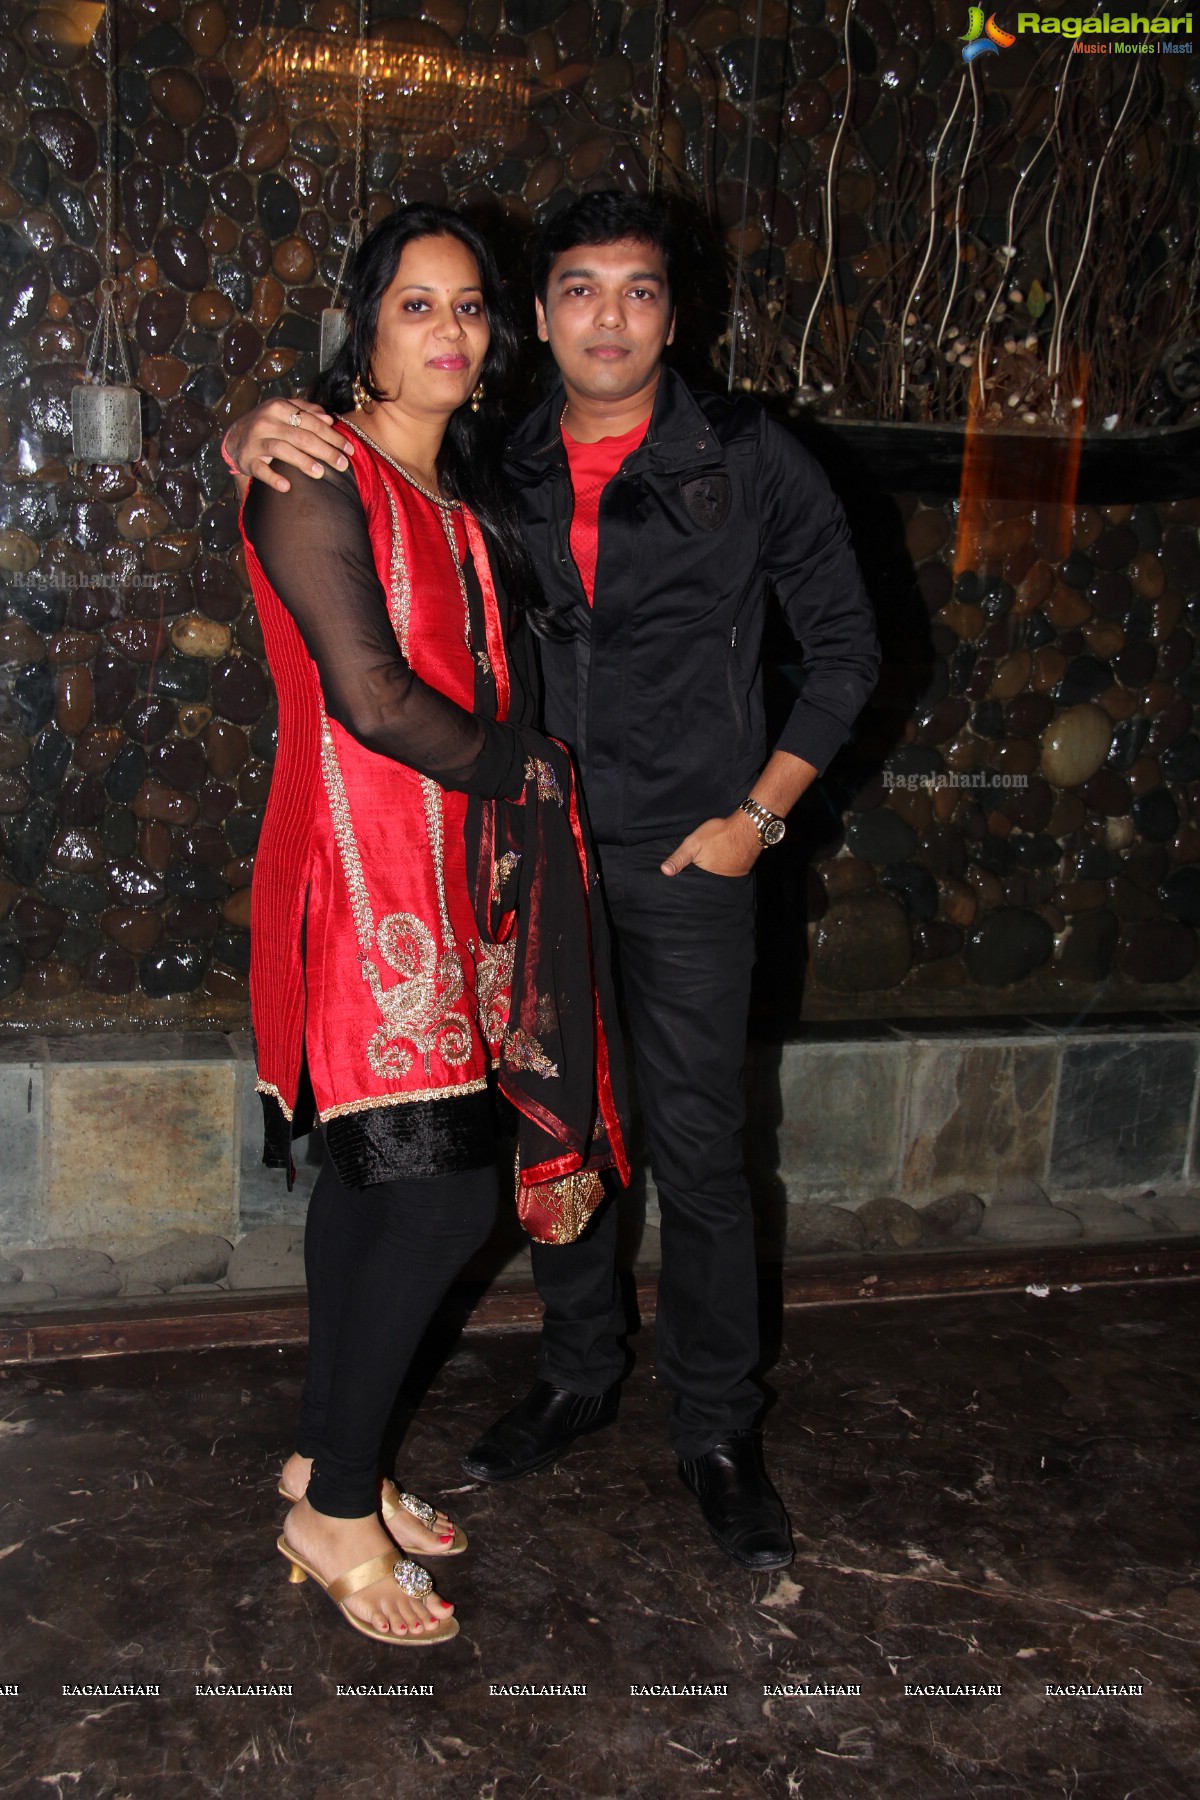 Night Shades Couples Club Musical Antakshari at Solitaire Hotel, Hyderabad